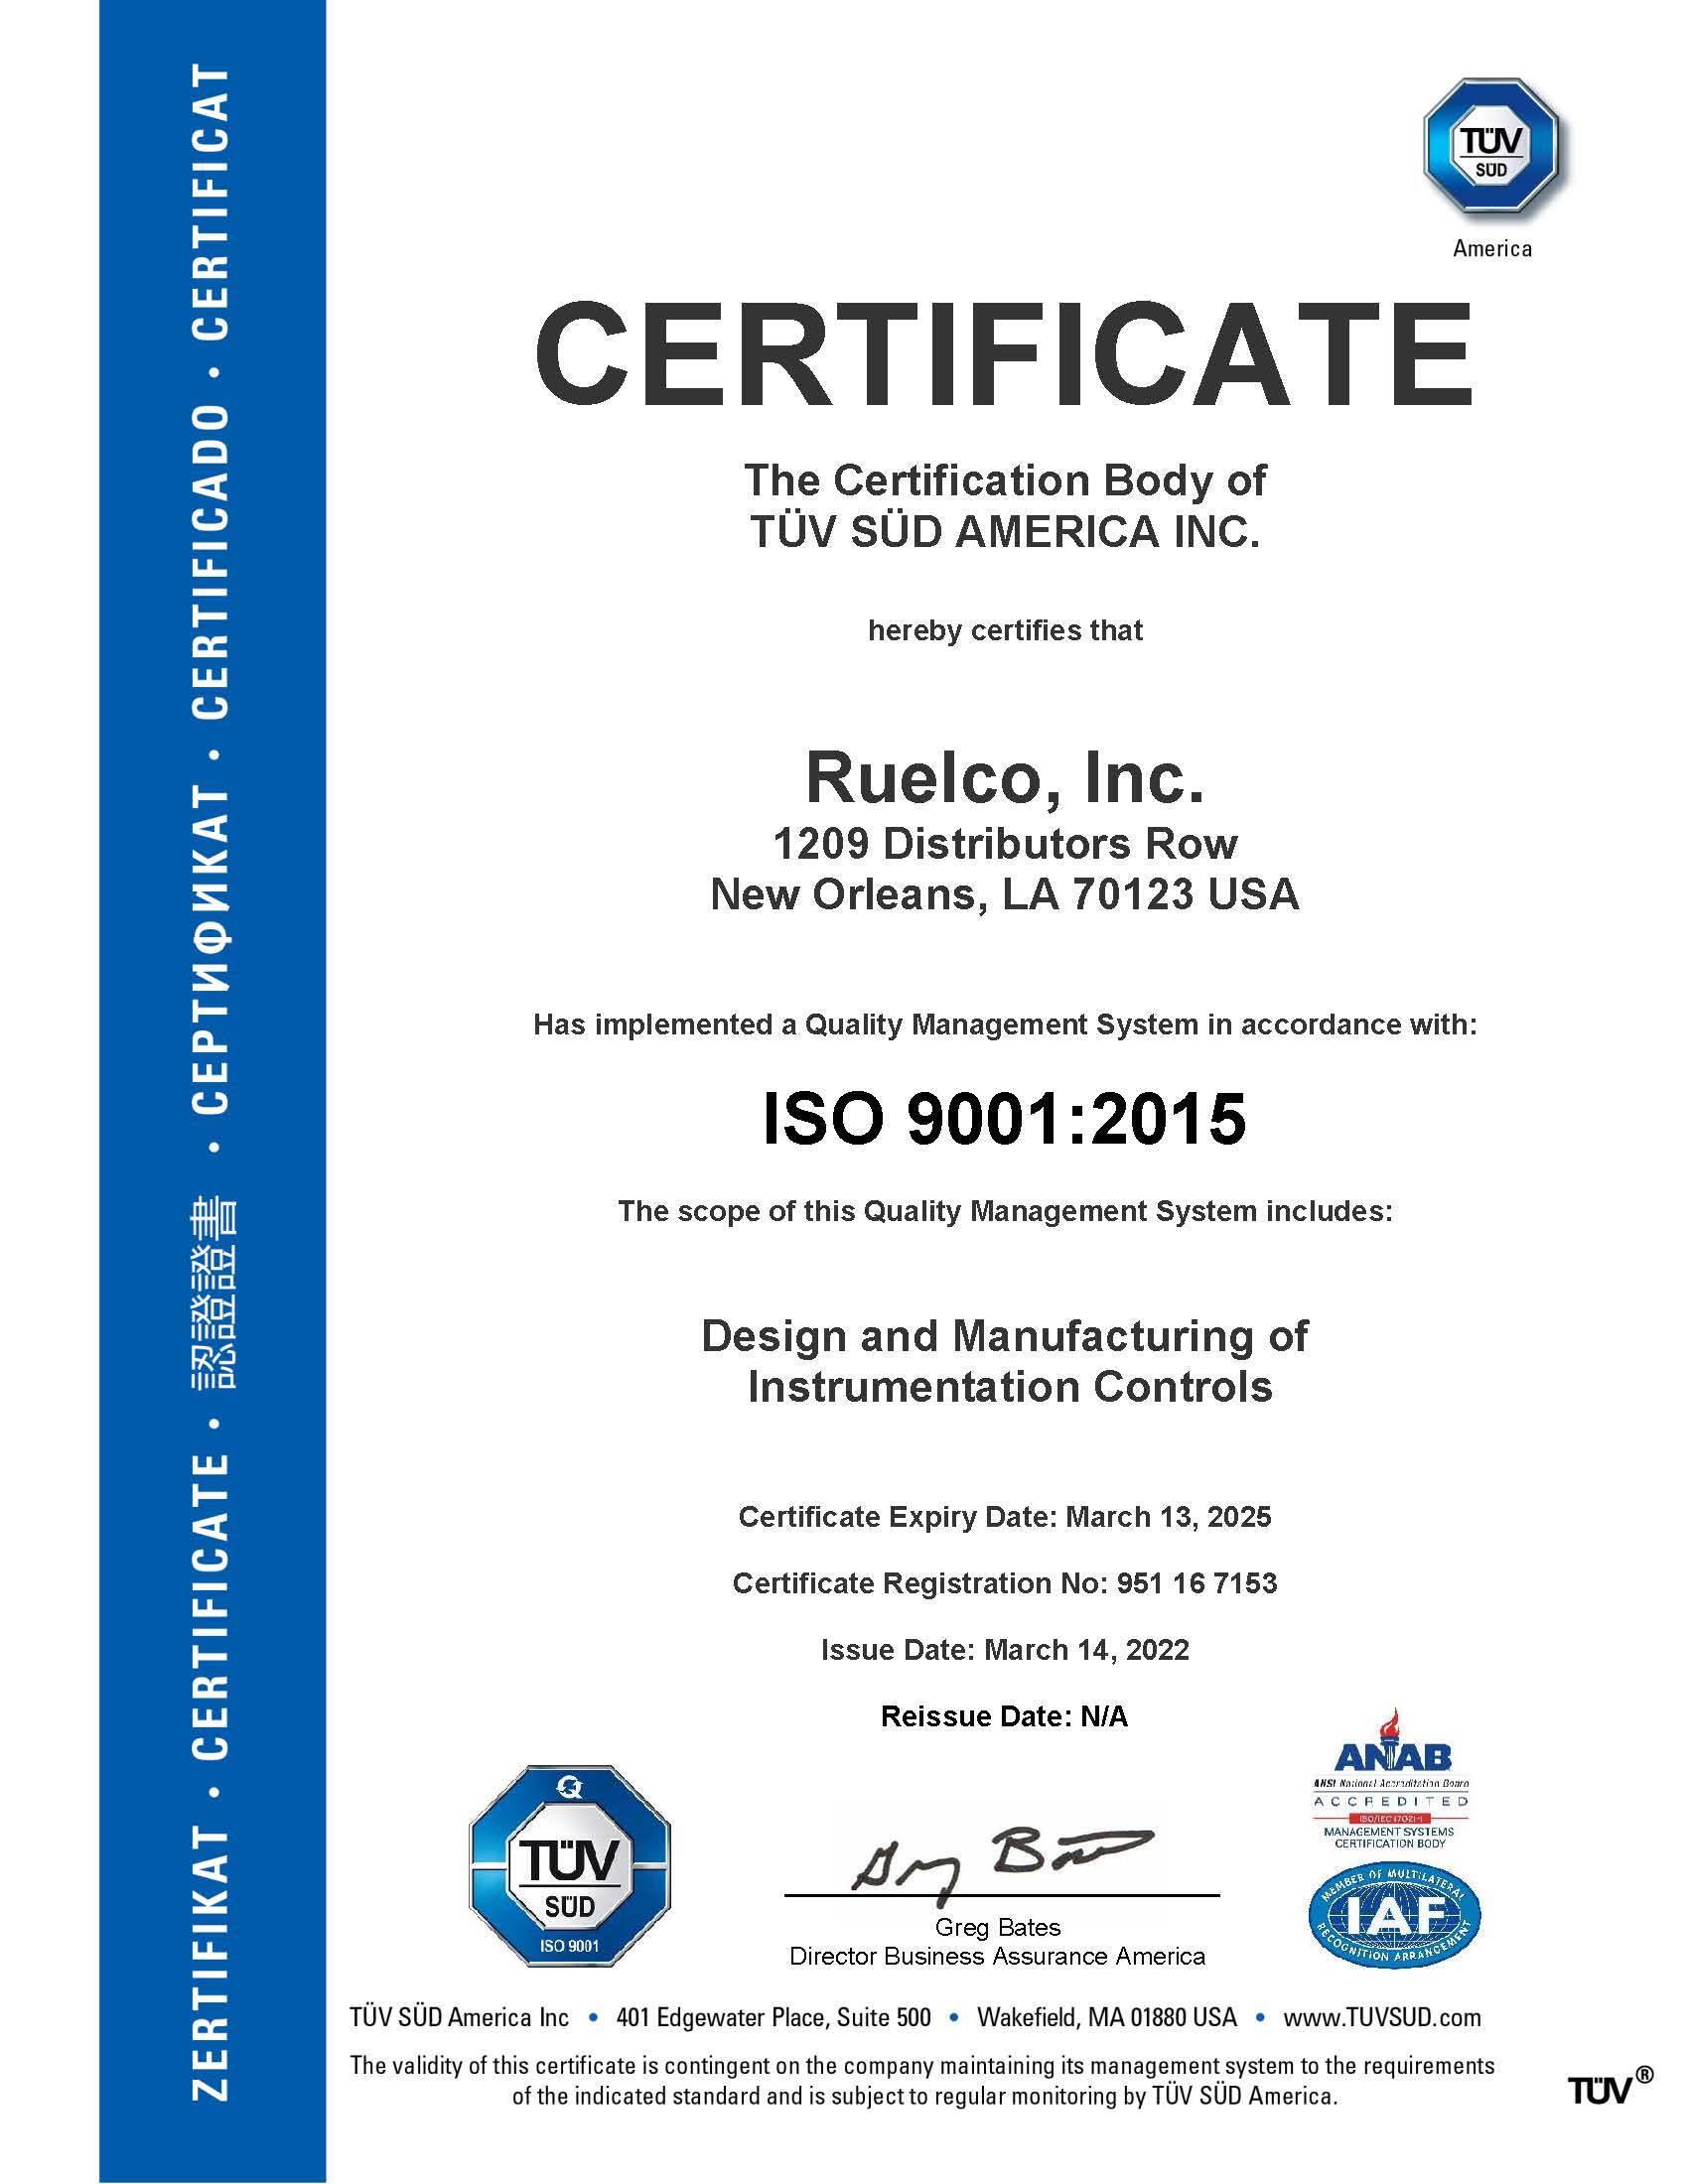 Ruelco ISO 9001:2015 Certificate